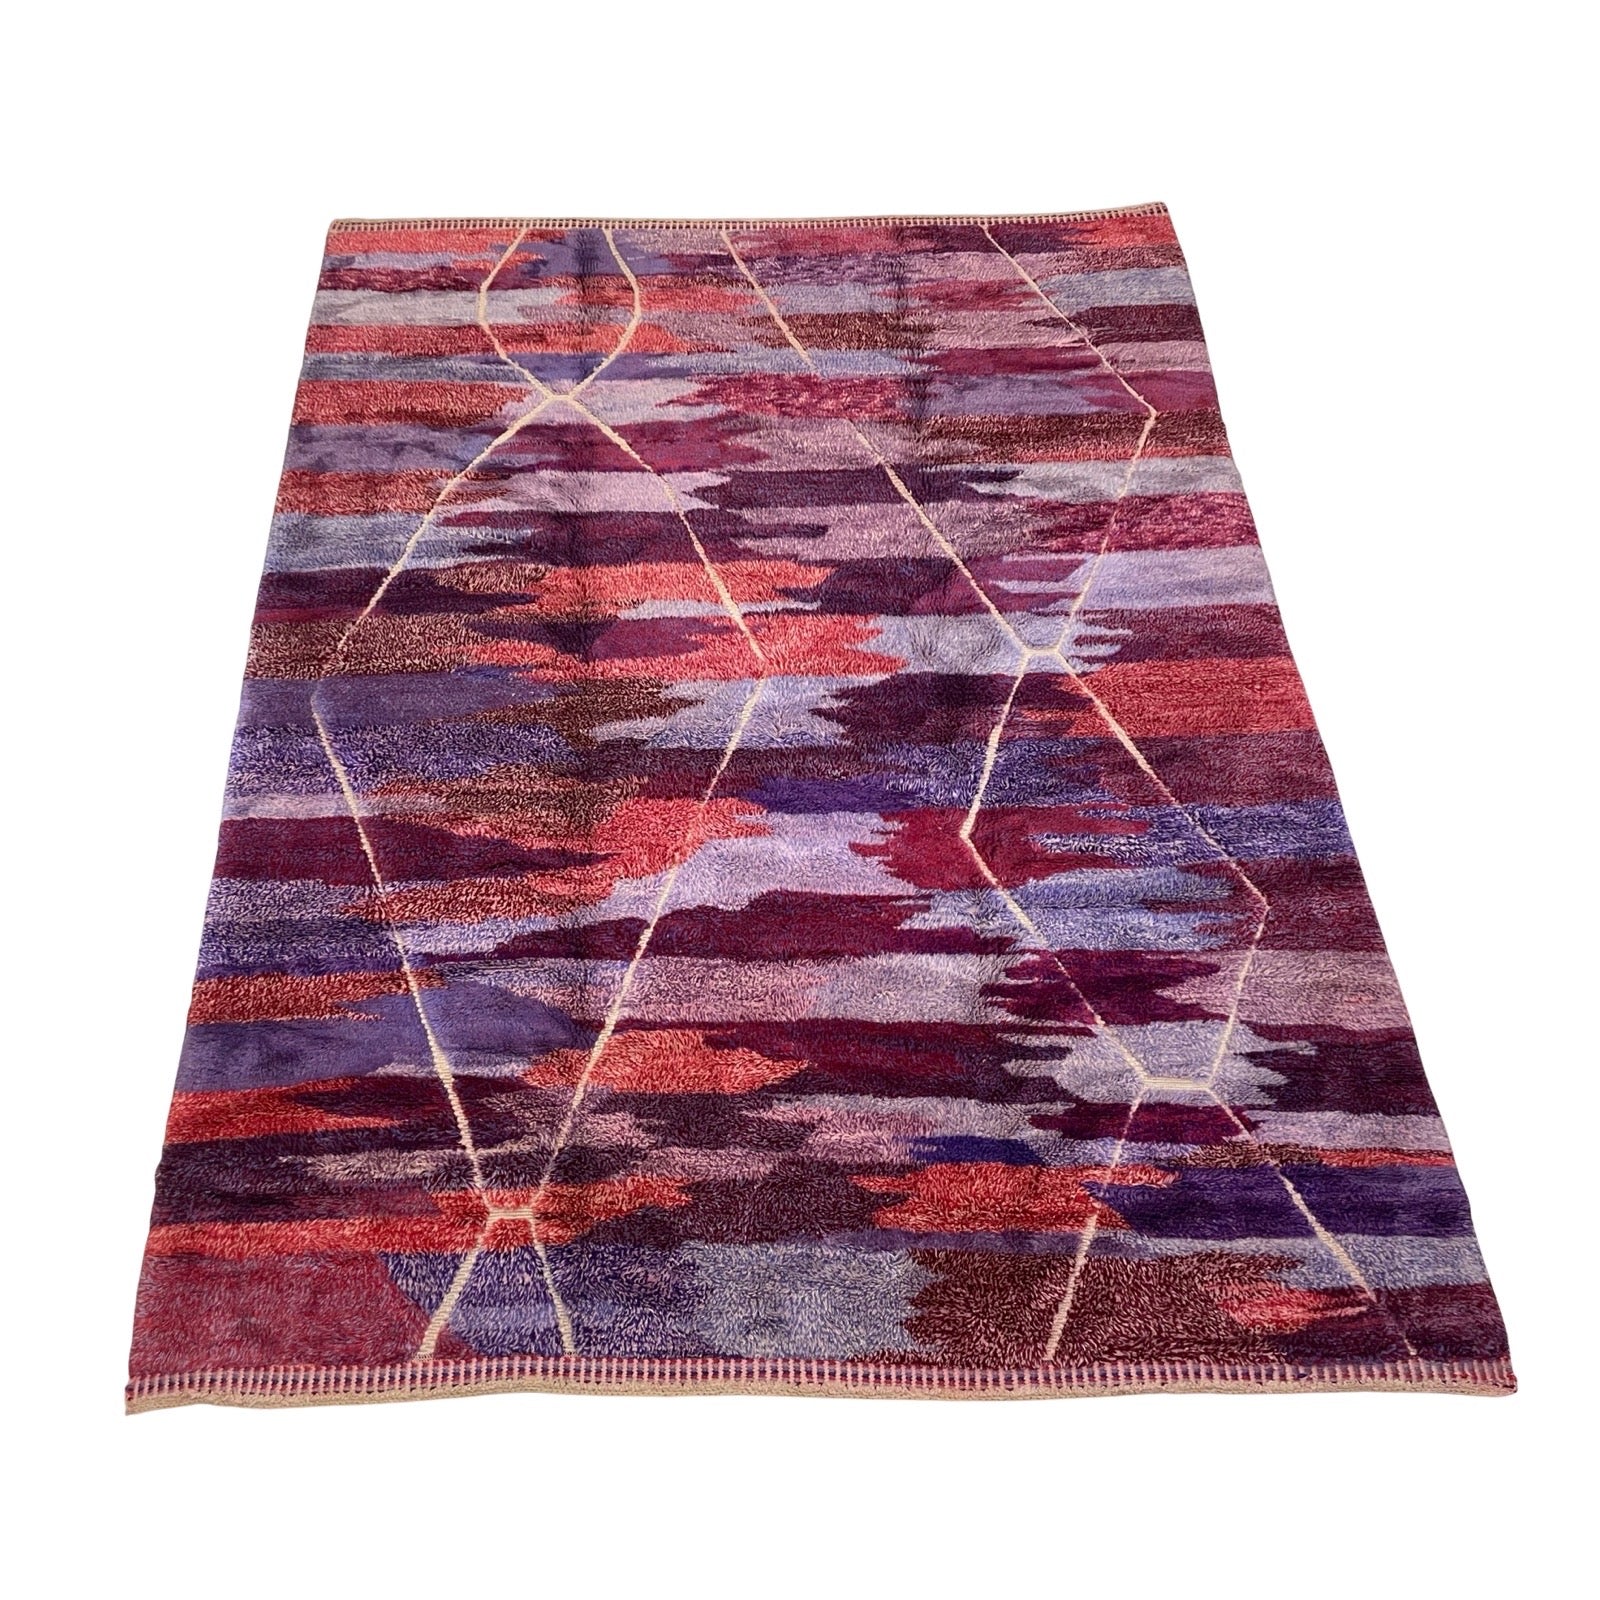 Handwoven geometric Moroccan rug in fuchsia and maroon - Kantara | Moroccan Rugs